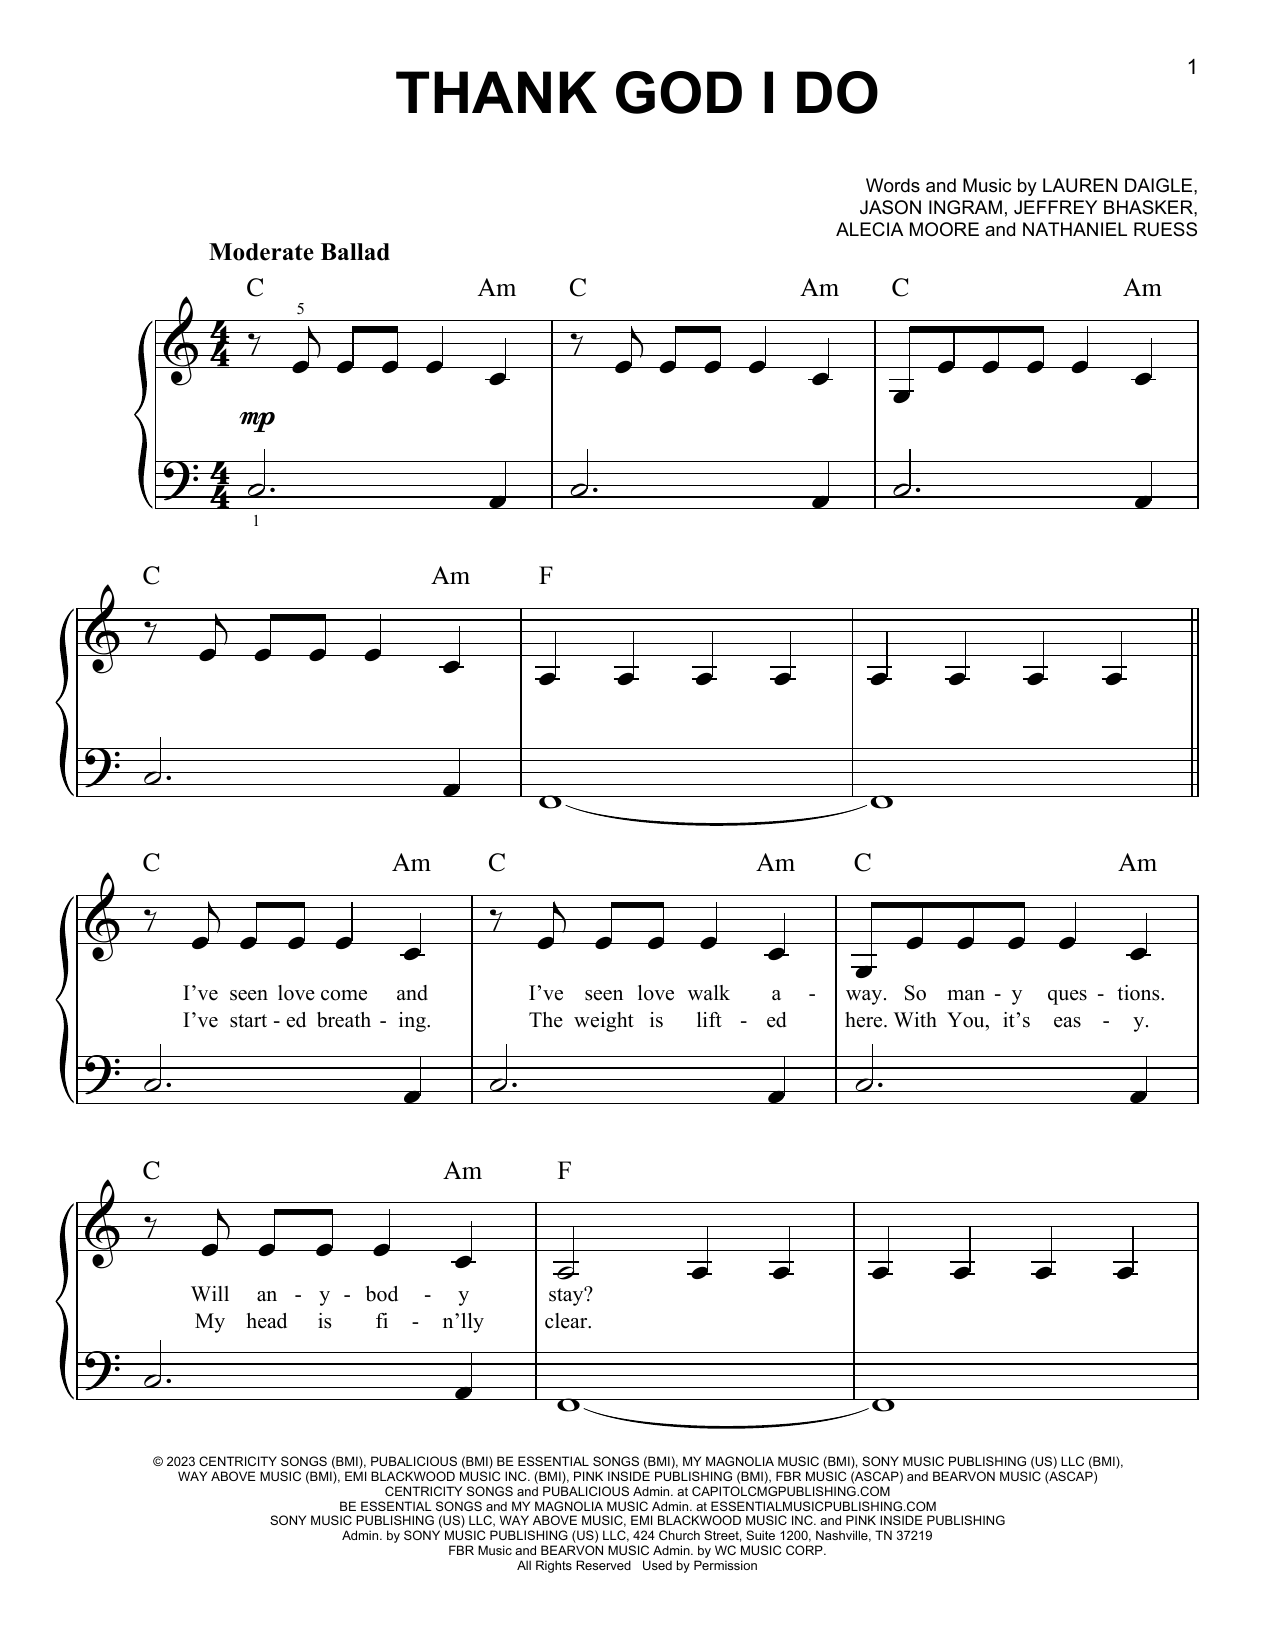 Thank God I Do Sheet Music by Lauren Daigle for Piano/Keyboard | Noteflight